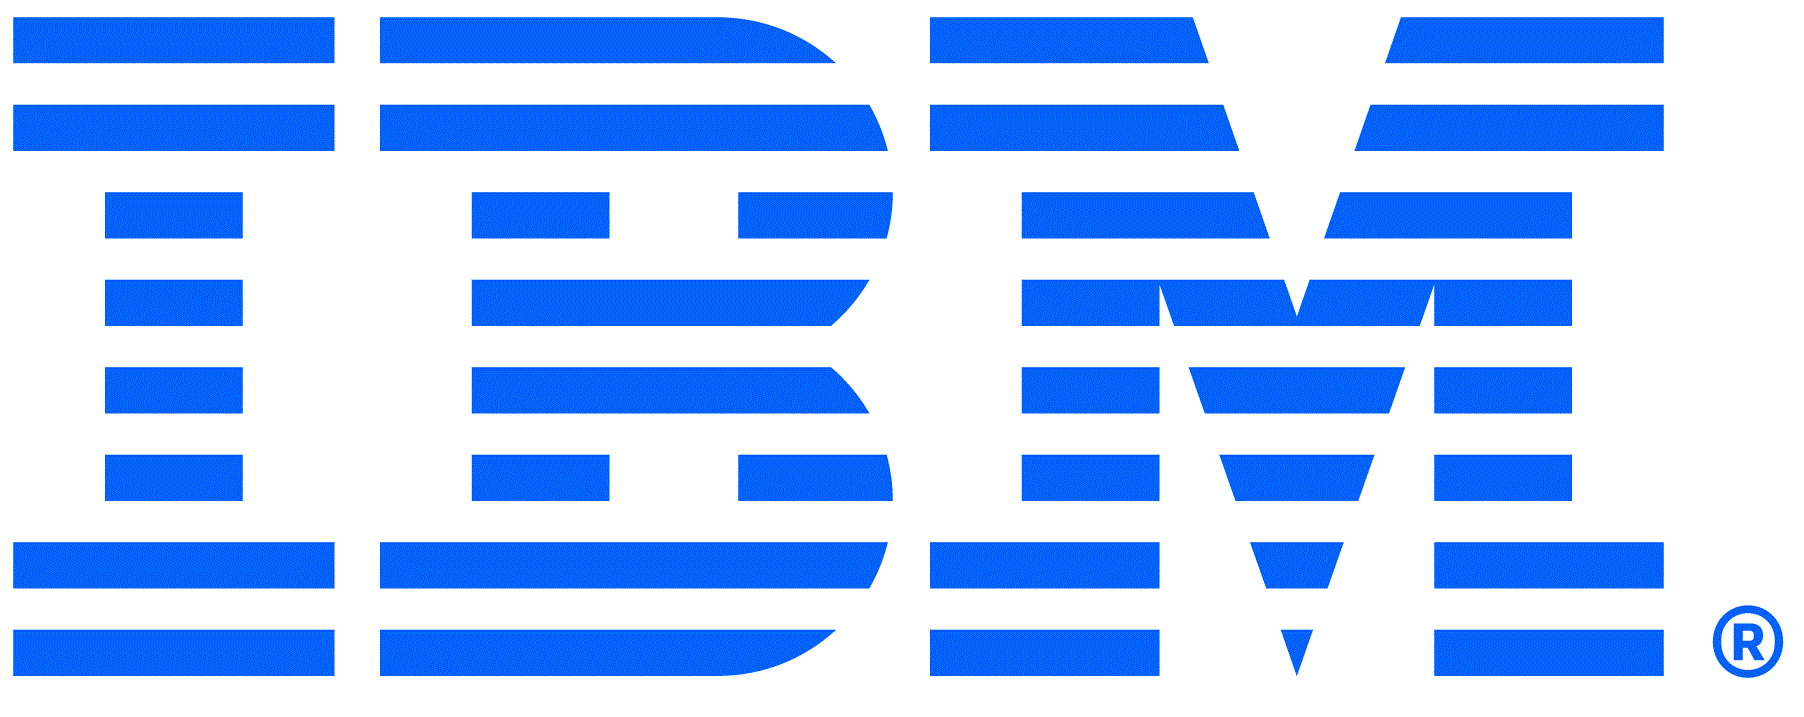 IBM Research Australia